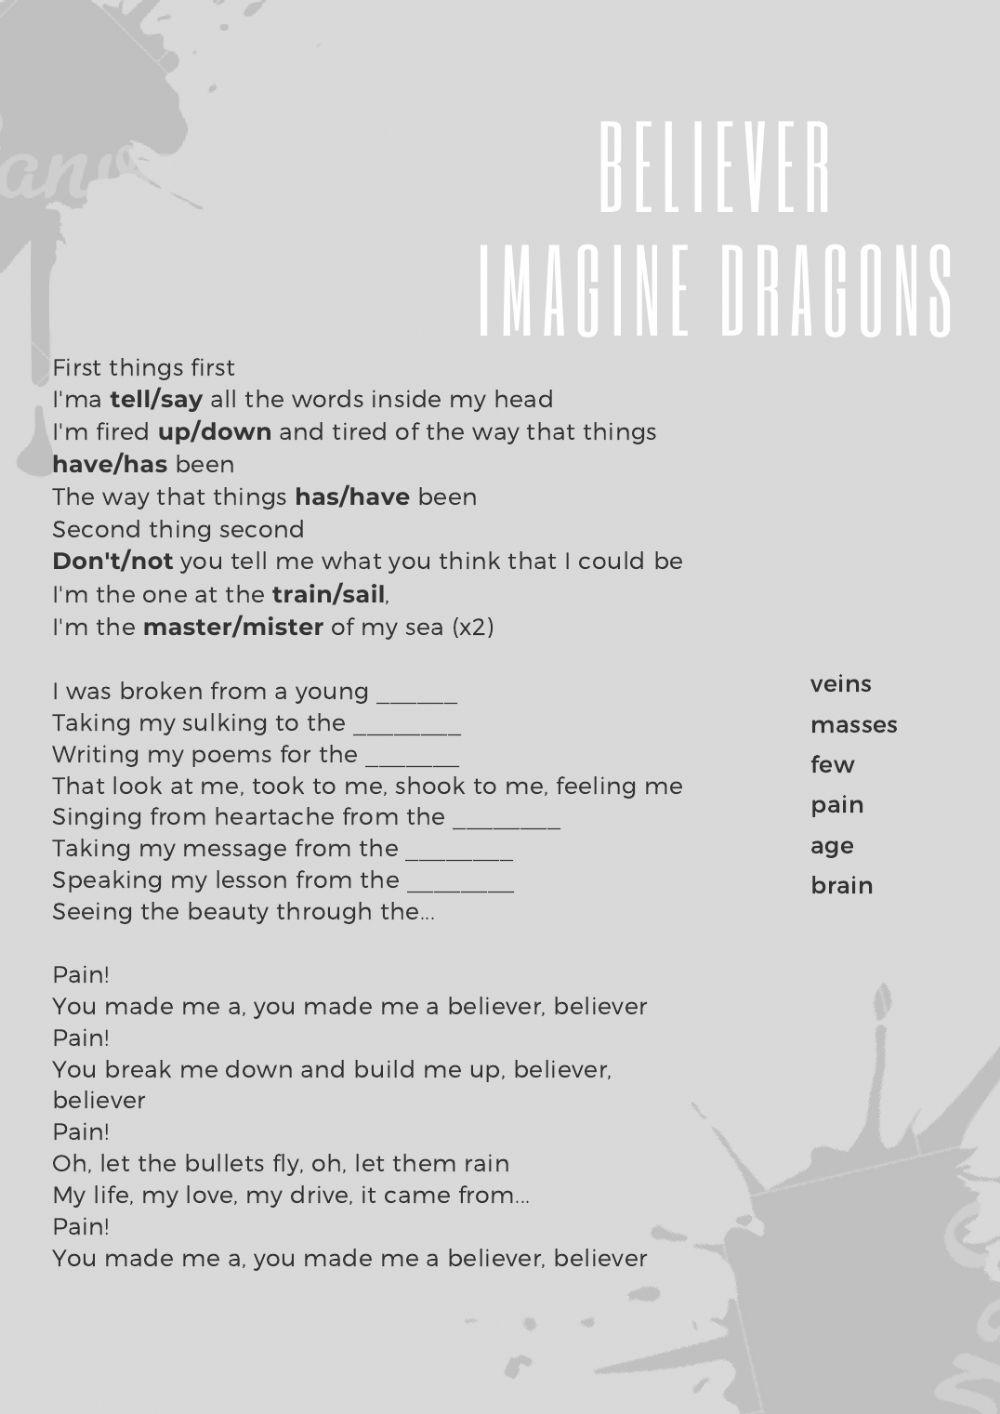 Imagine Dragons – Believer Lyrics